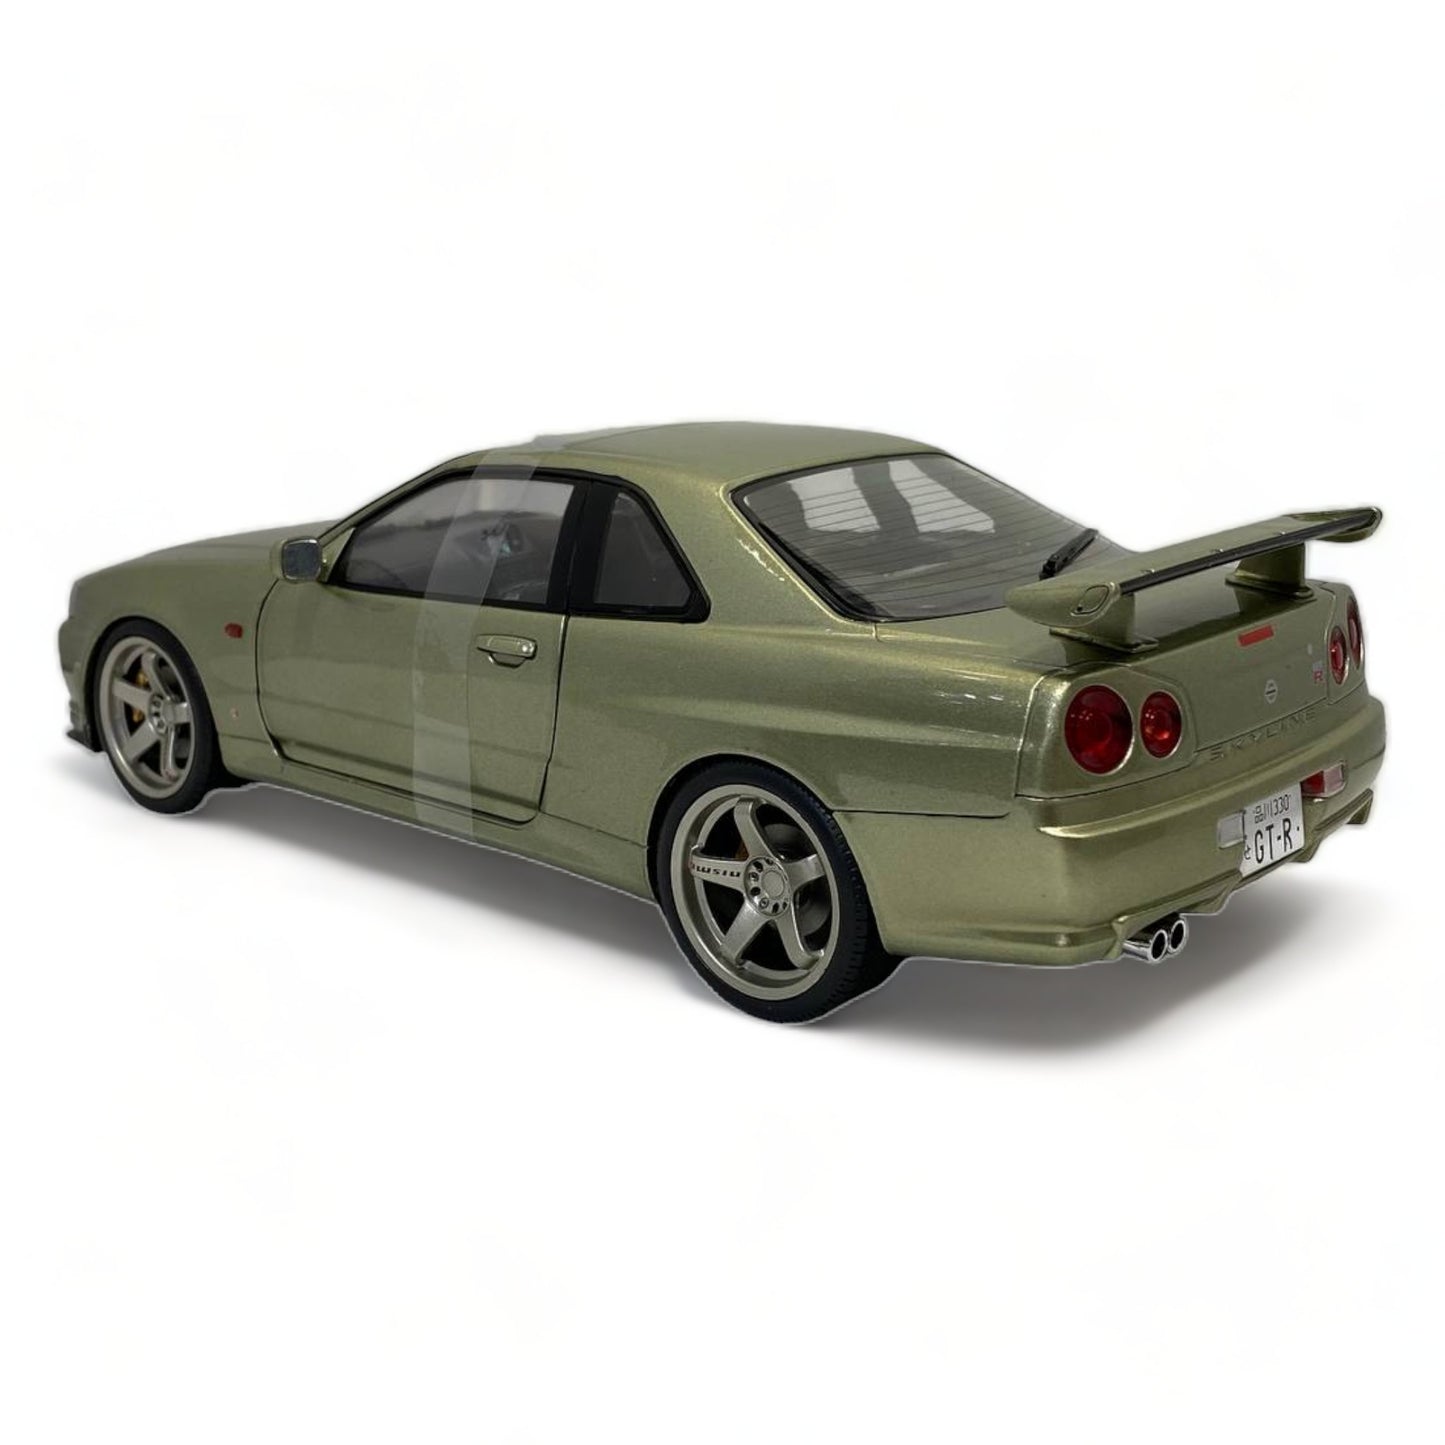 1/18 Diecast SOLIDO Nissan Skyline GT-R R34 Green Metallic Miniature Car|Sold in Dturman.com Dubai UAE.